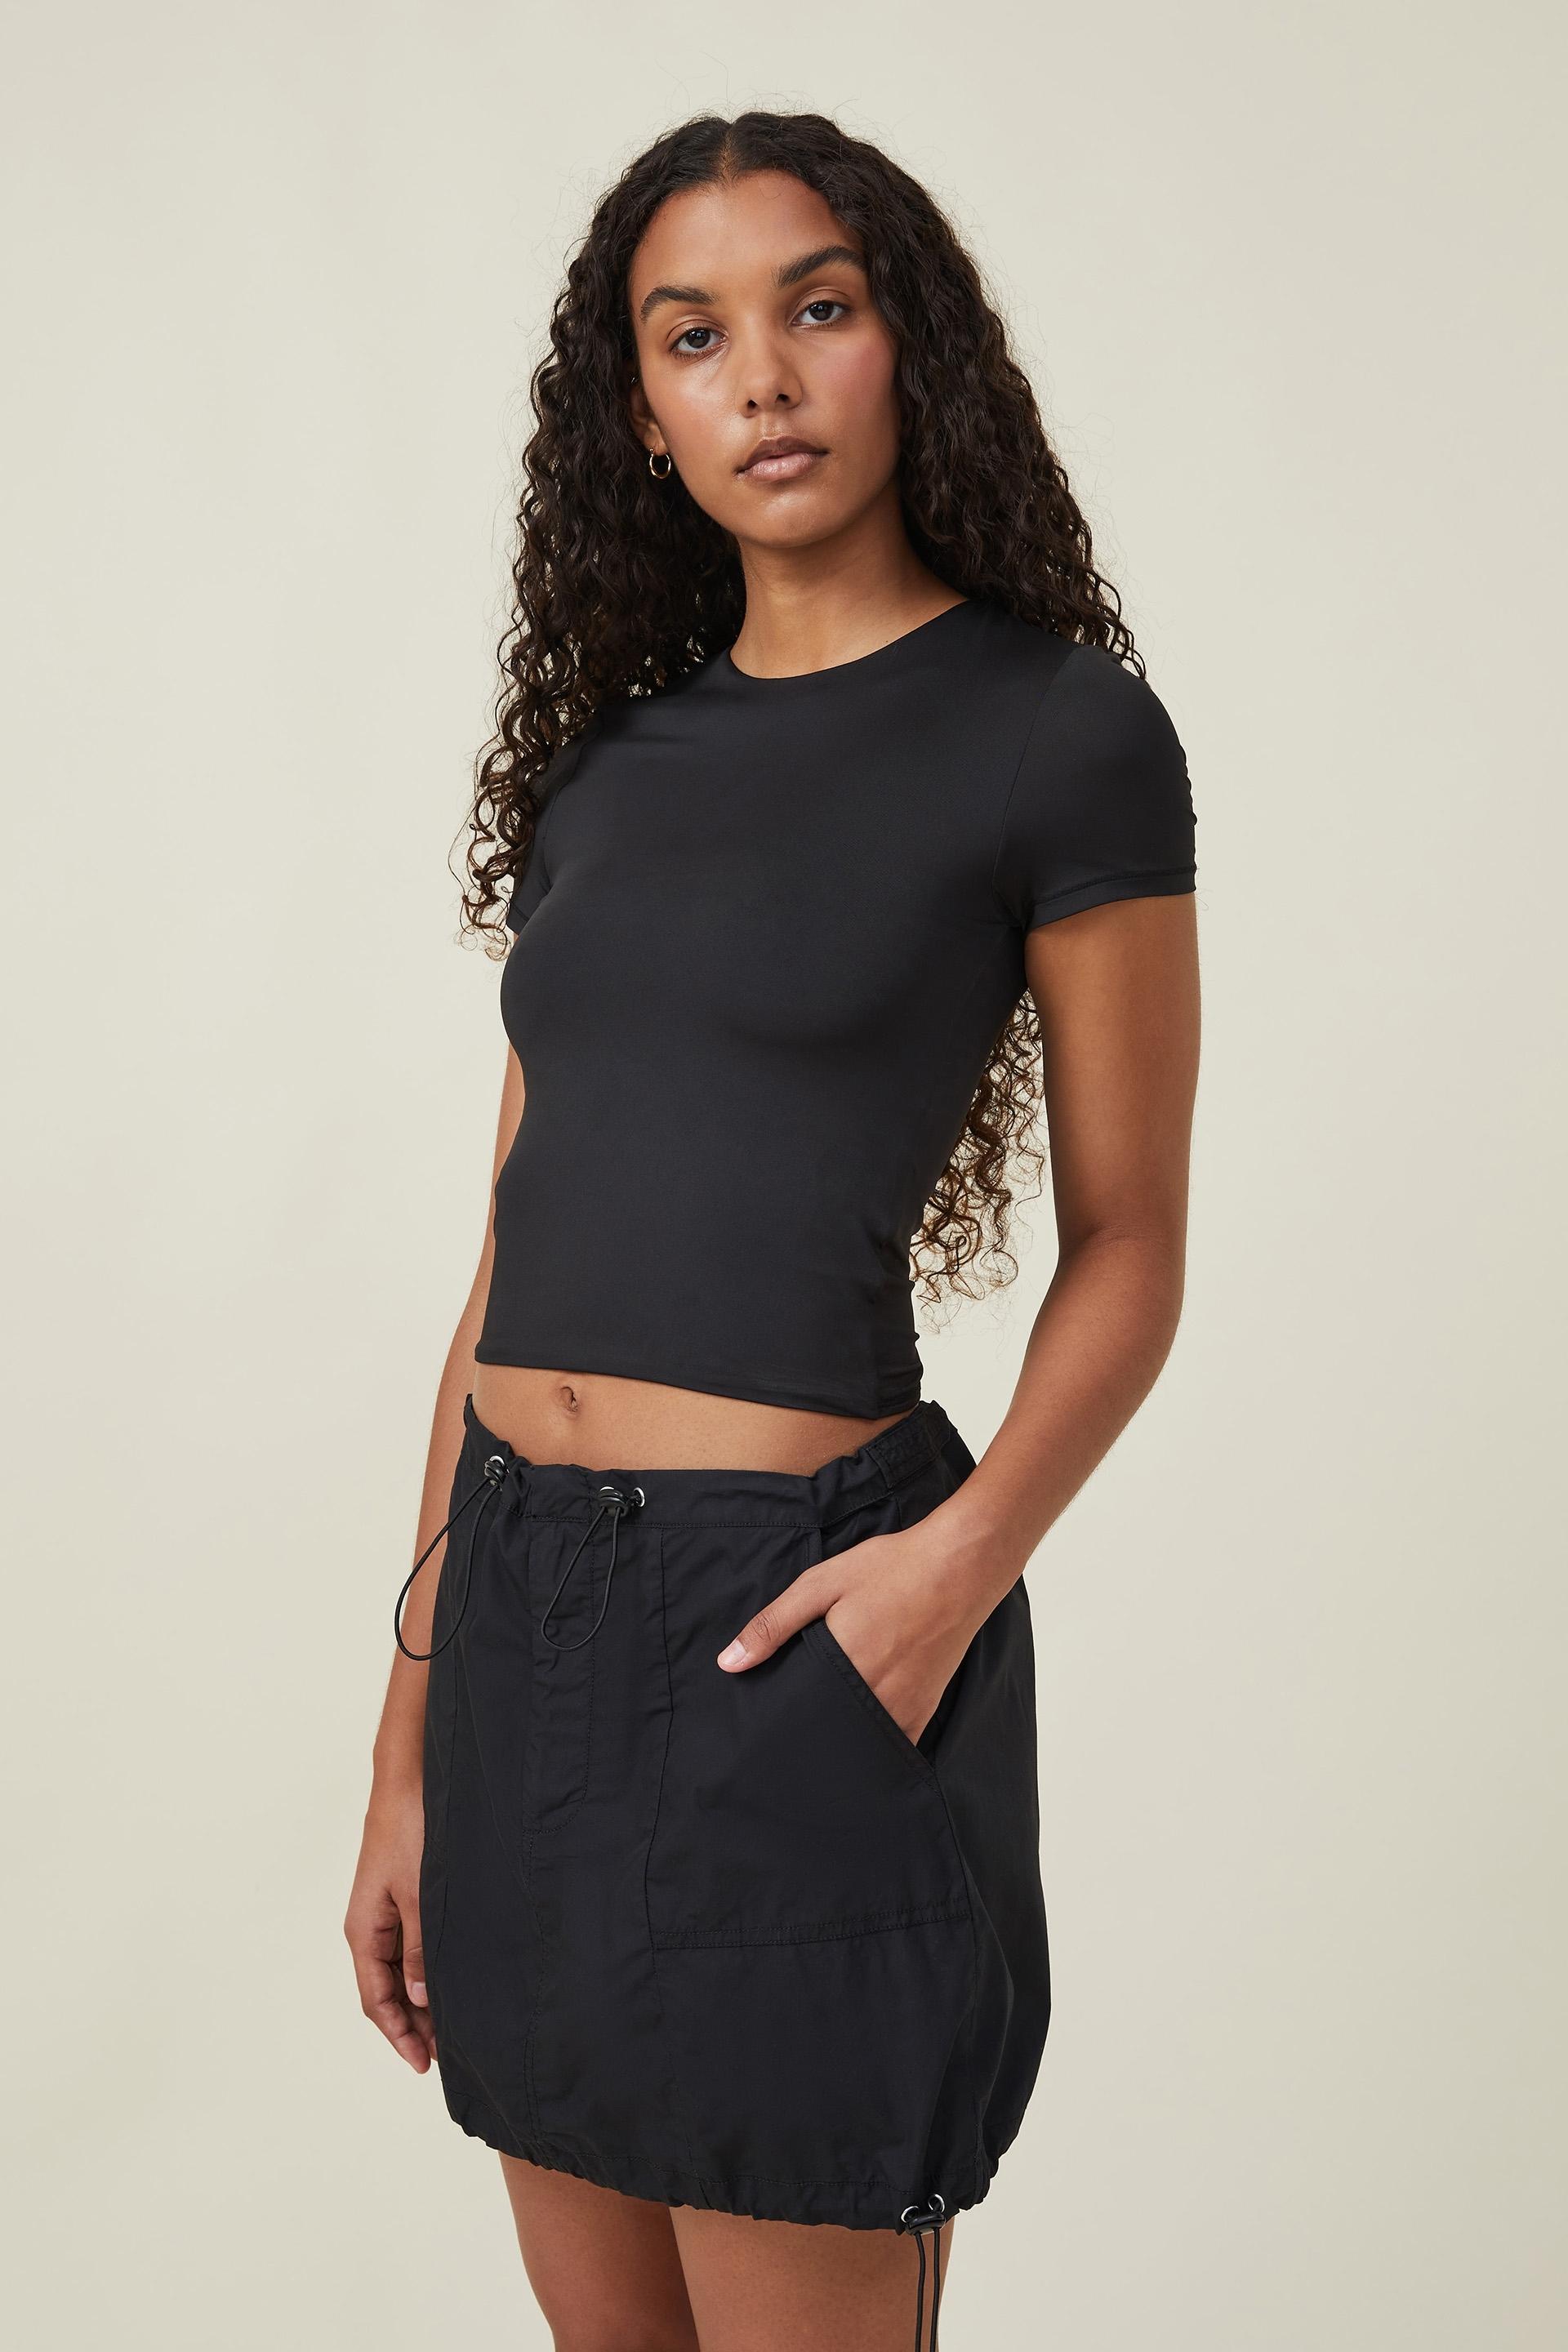 Jordan cargo mini skirt - black Cotton On Skirts | Superbalist.com